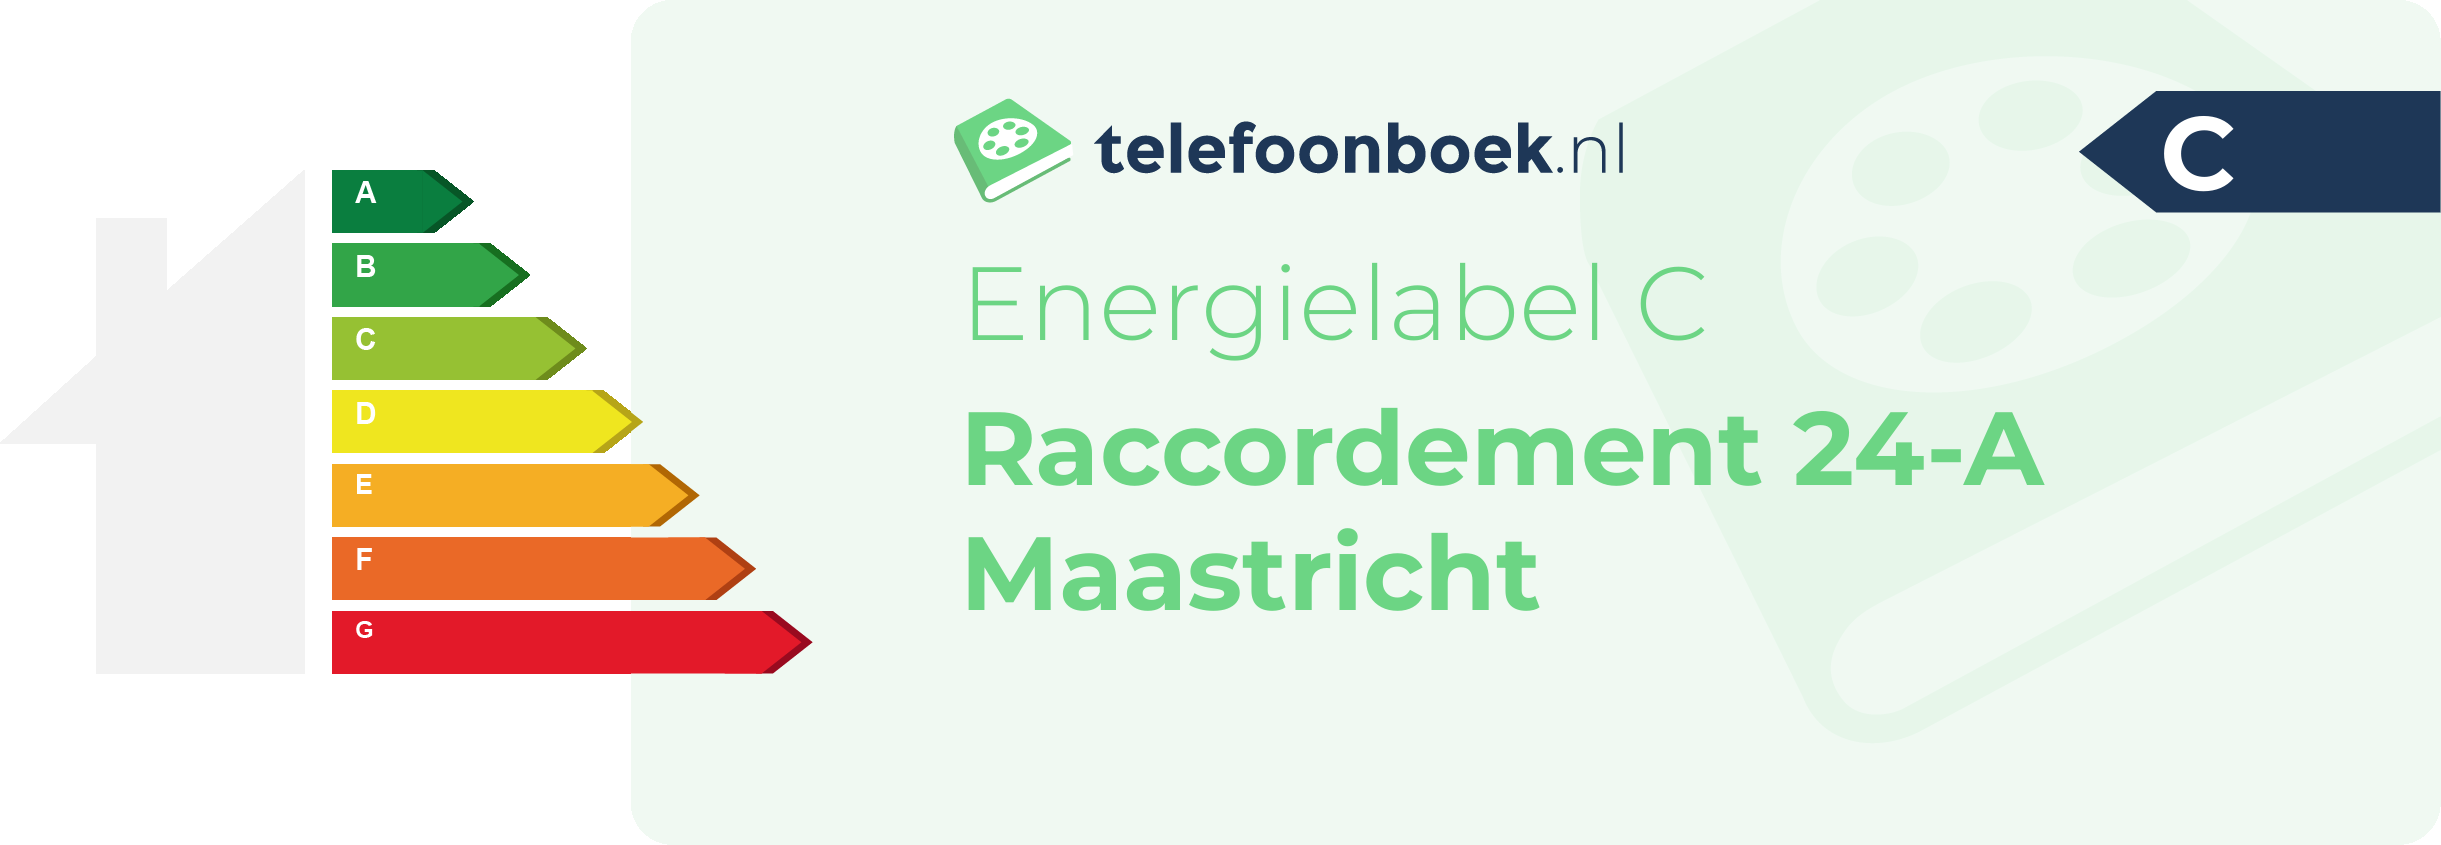 Energielabel Raccordement 24-A Maastricht